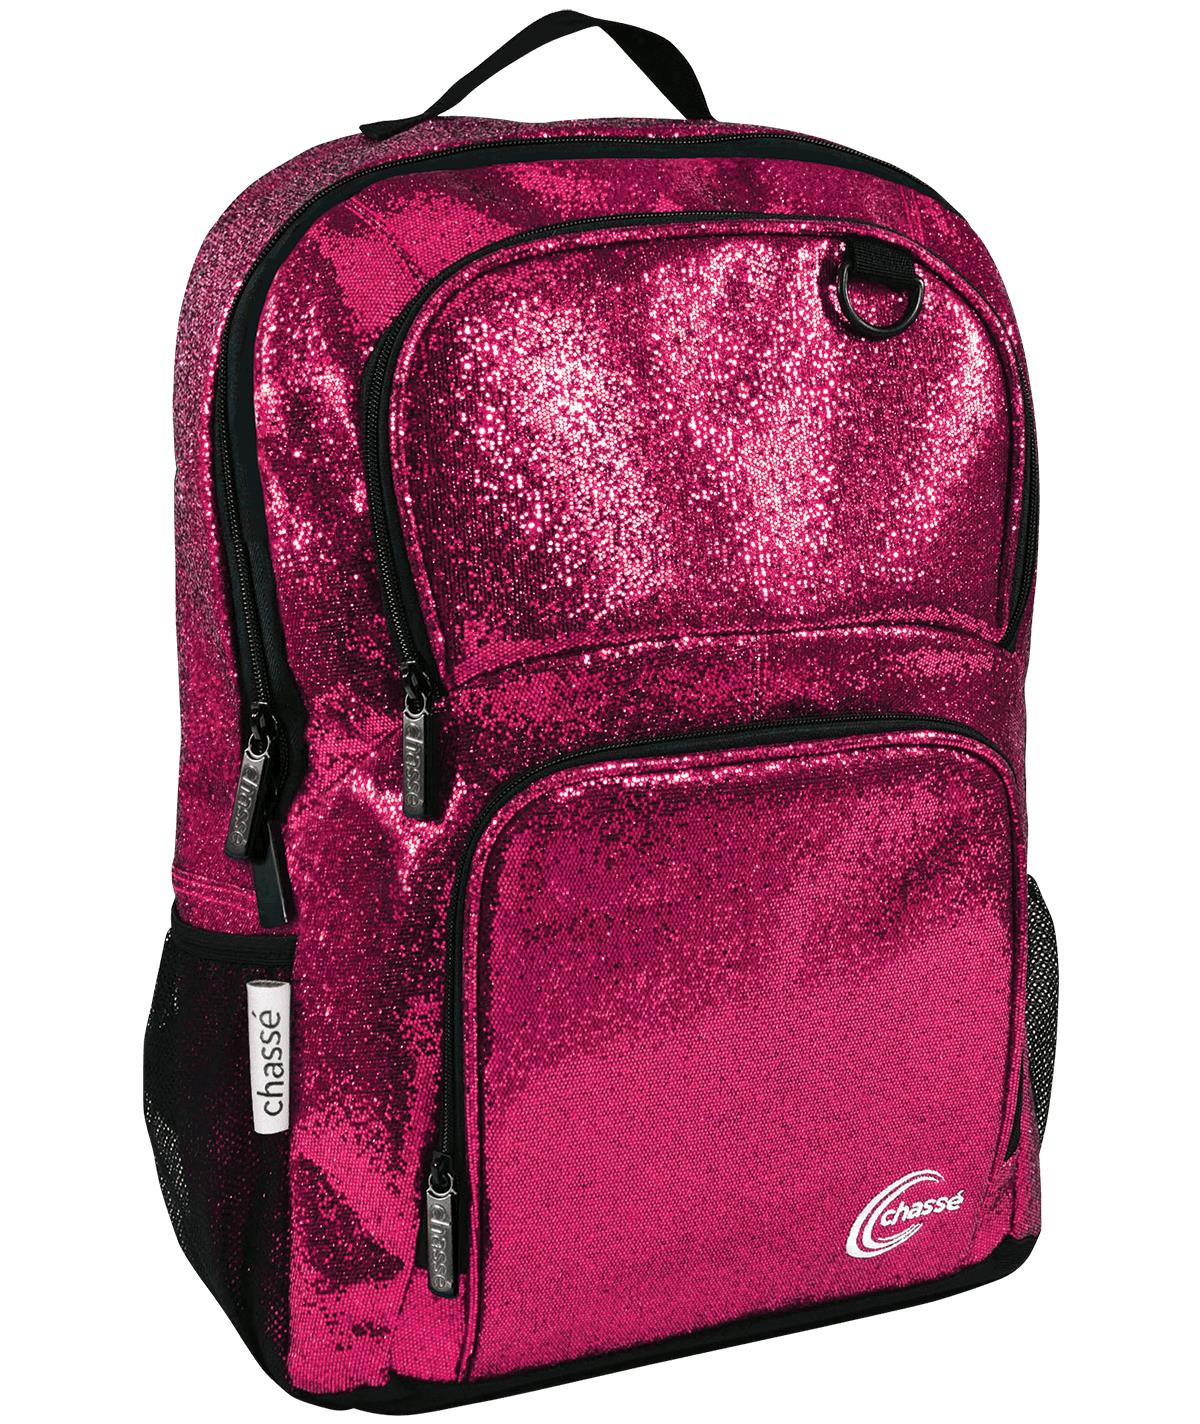 Chasse Glitter Backpack